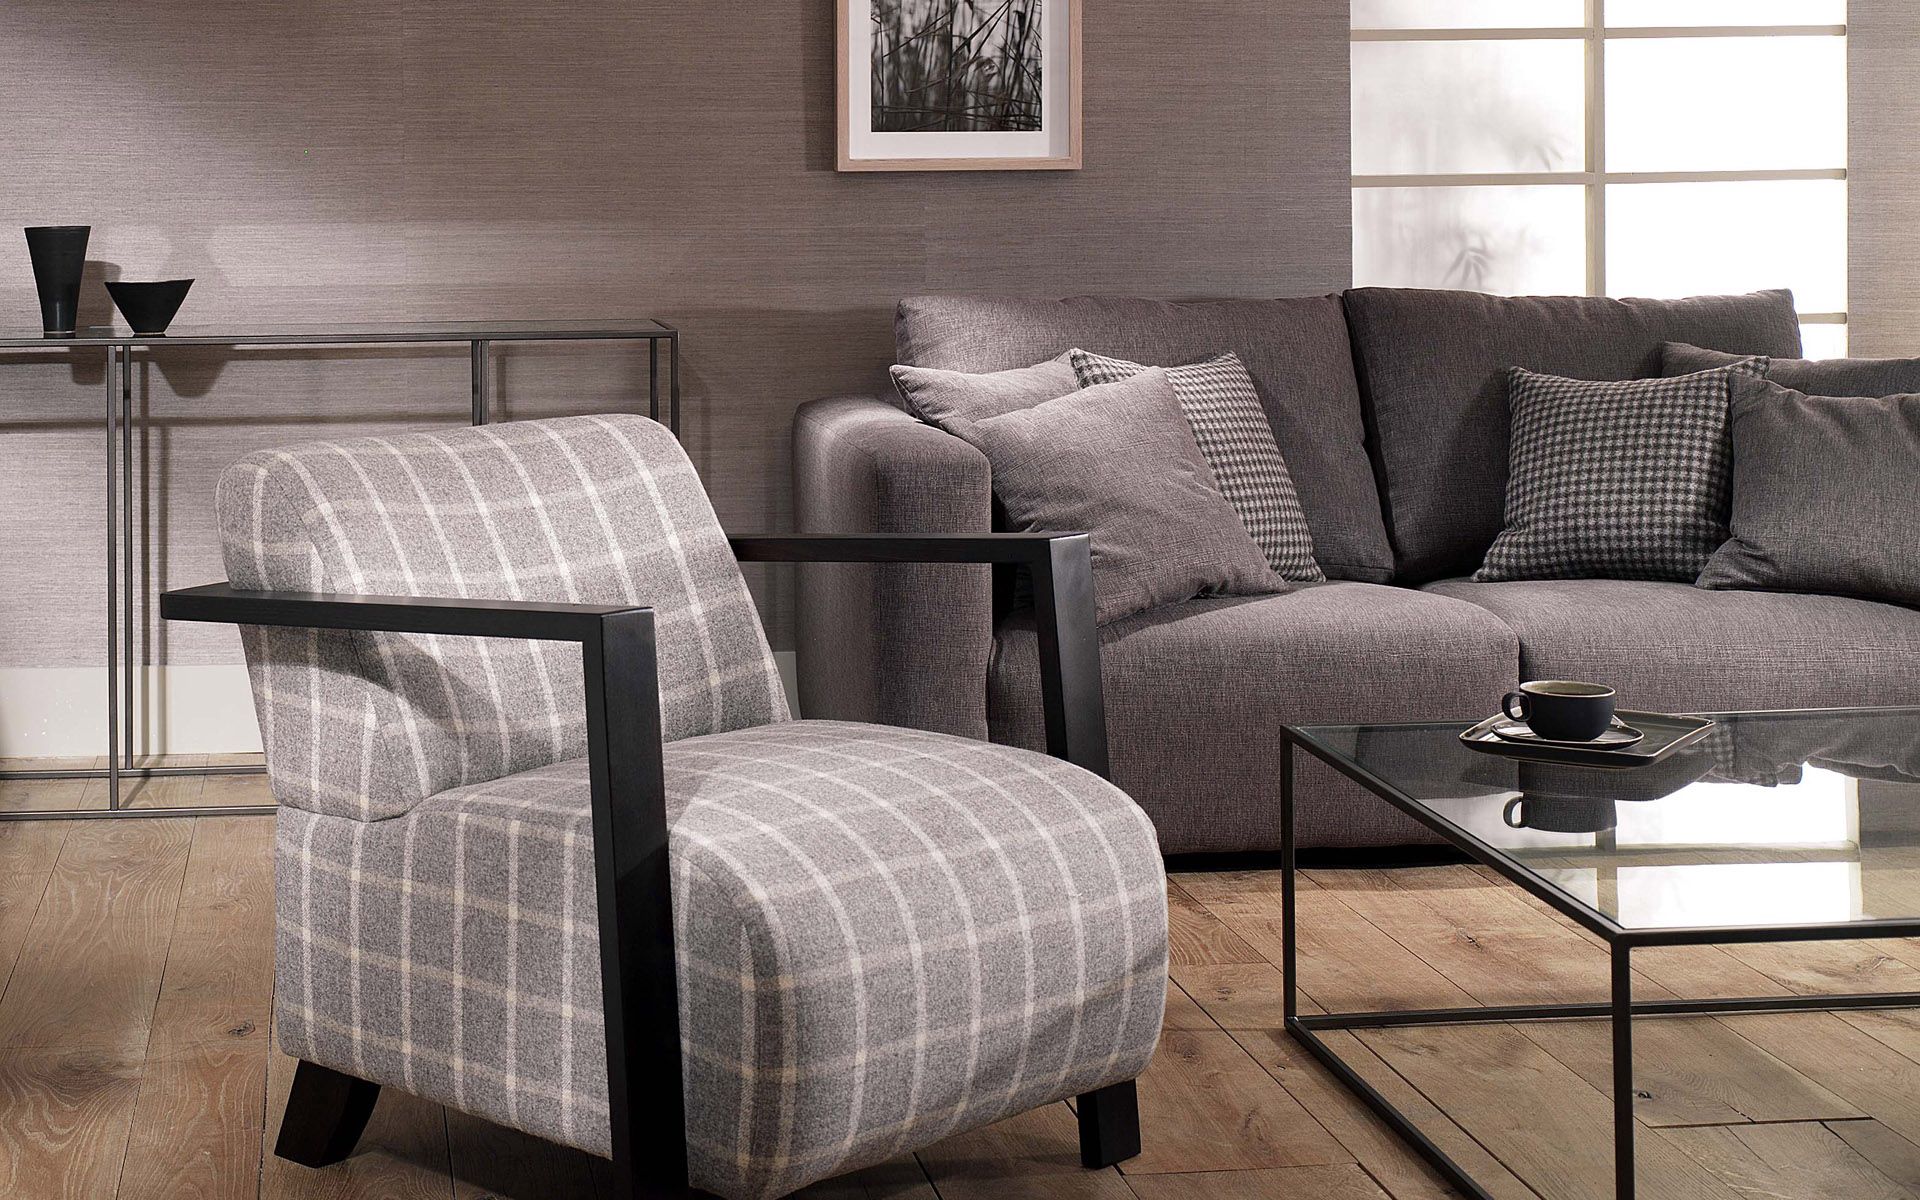 interior, miscellanea, miscellaneous, table, style, sofa, chairs, armchairs